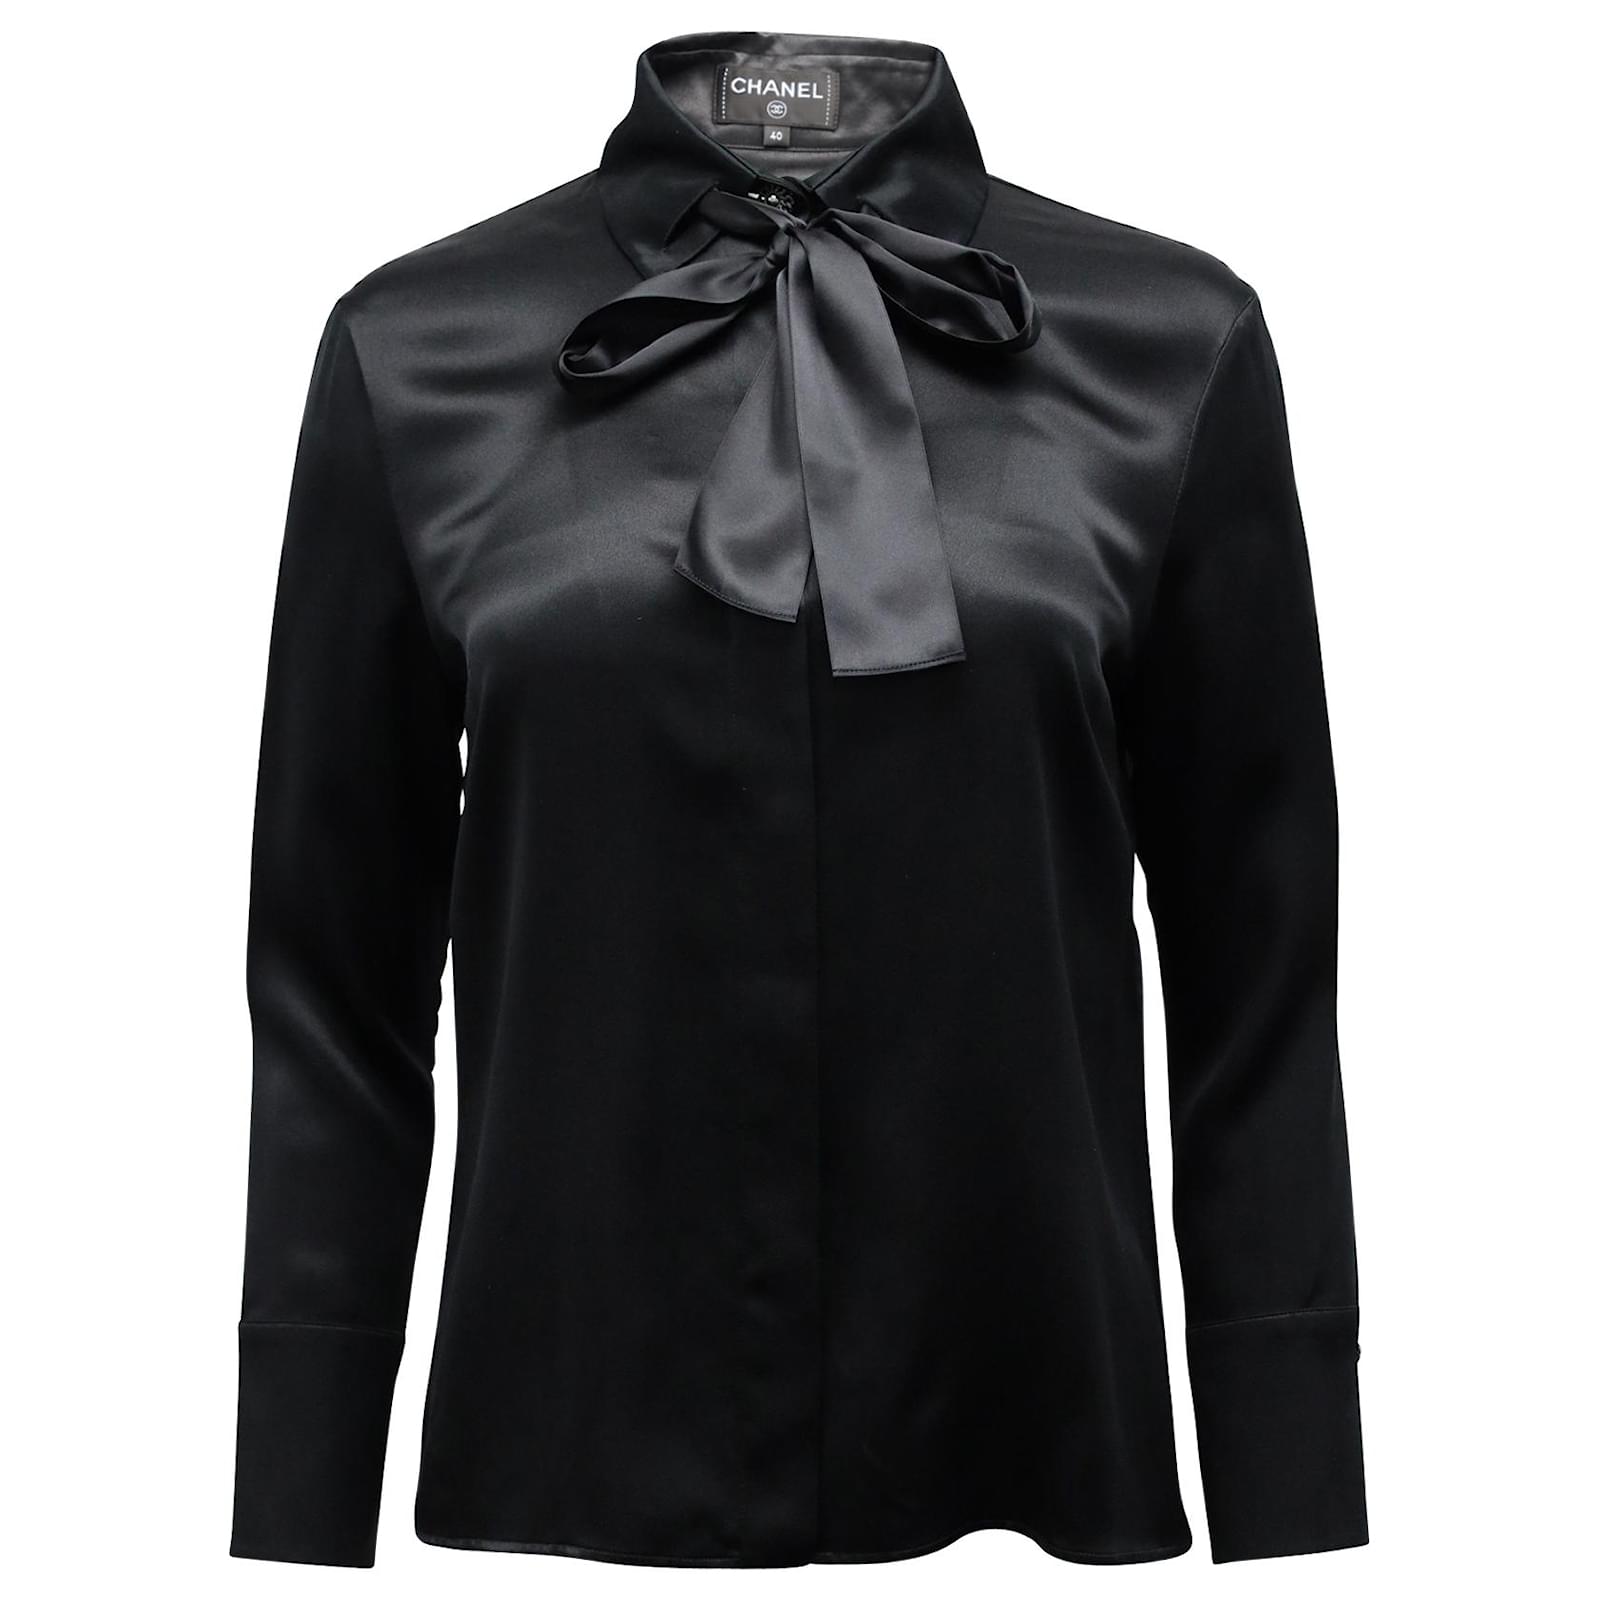 chanel blouse black